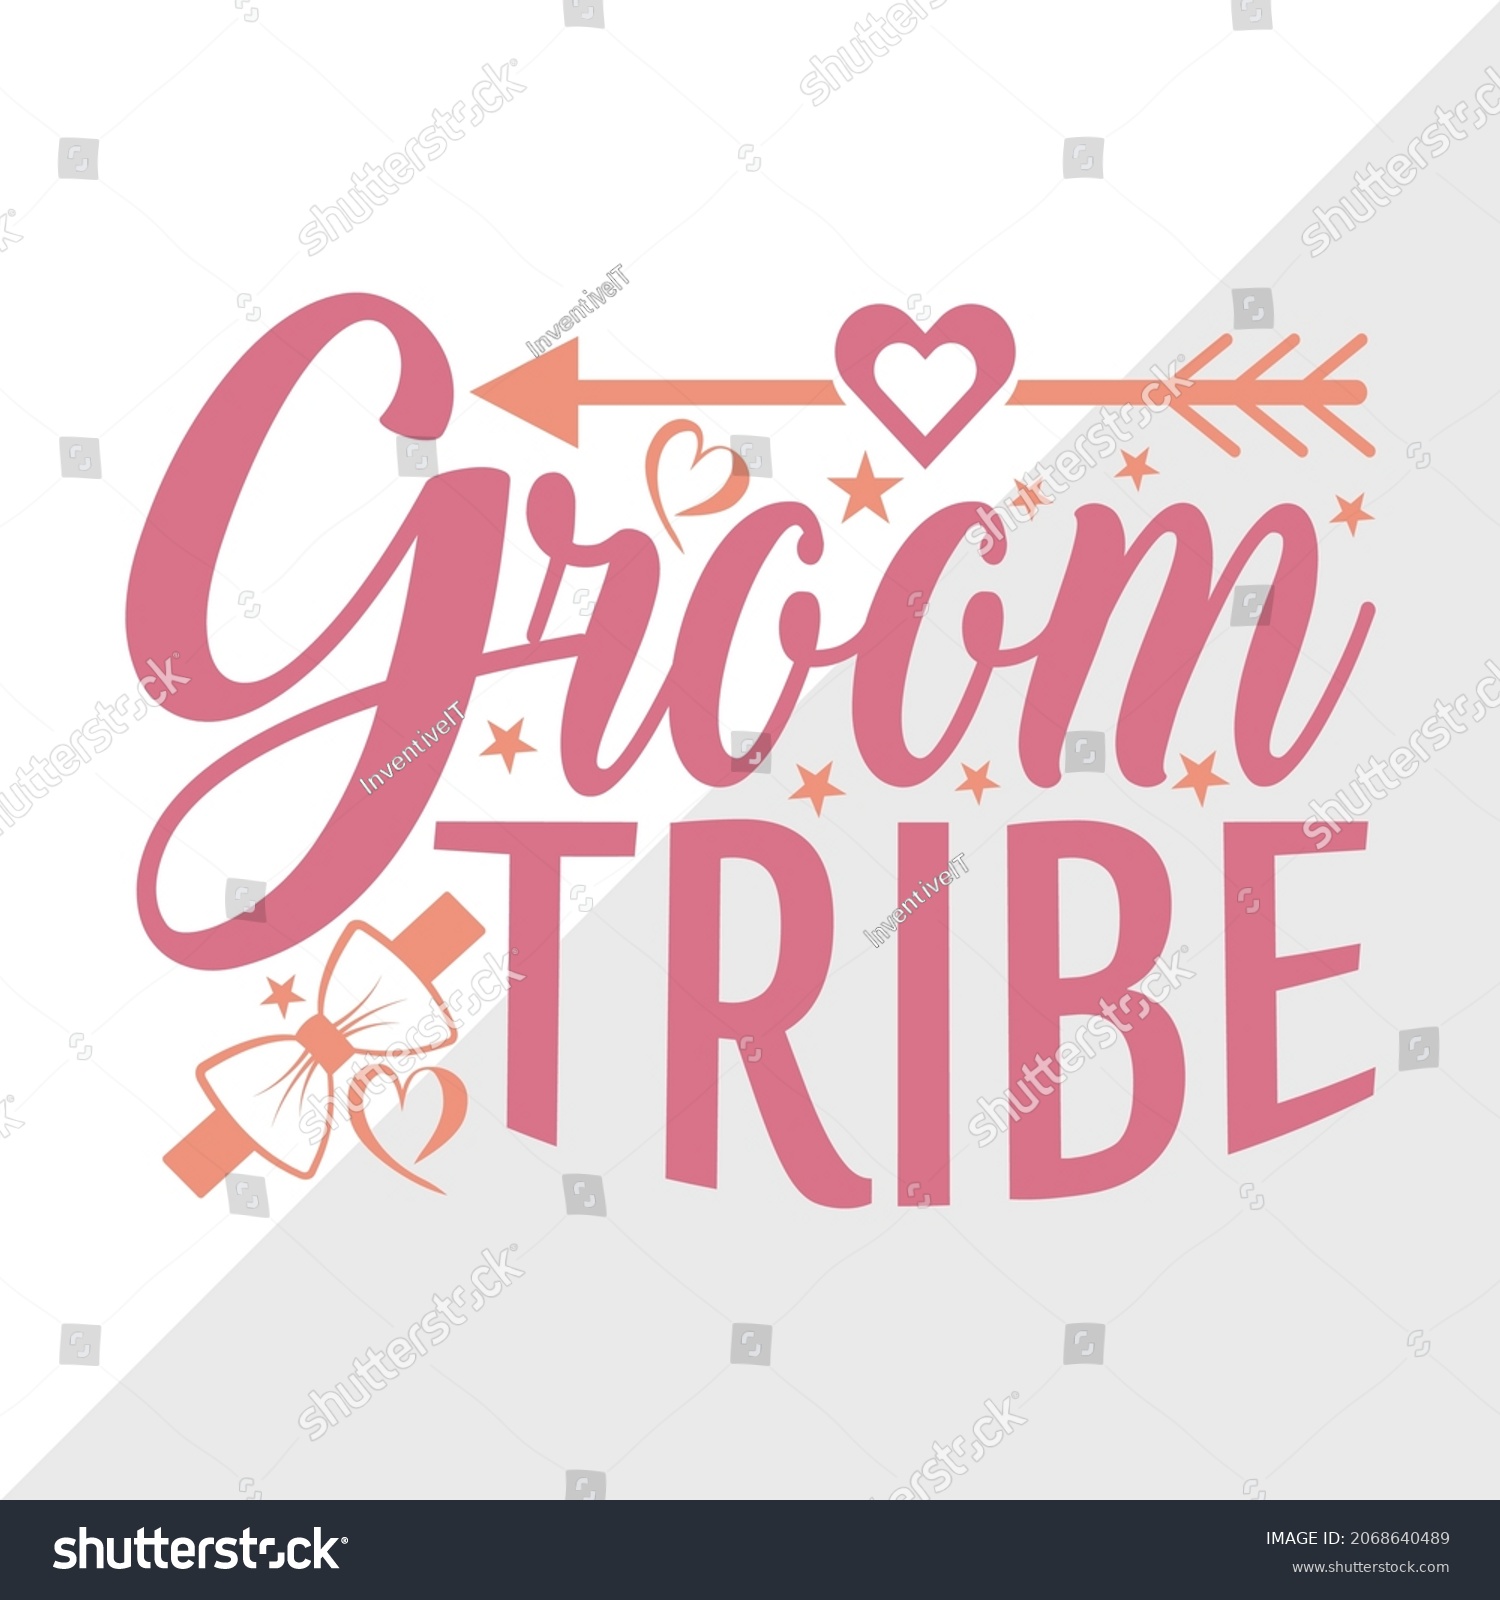 SVG of Groom Tribe Printable Vector Illustration svg